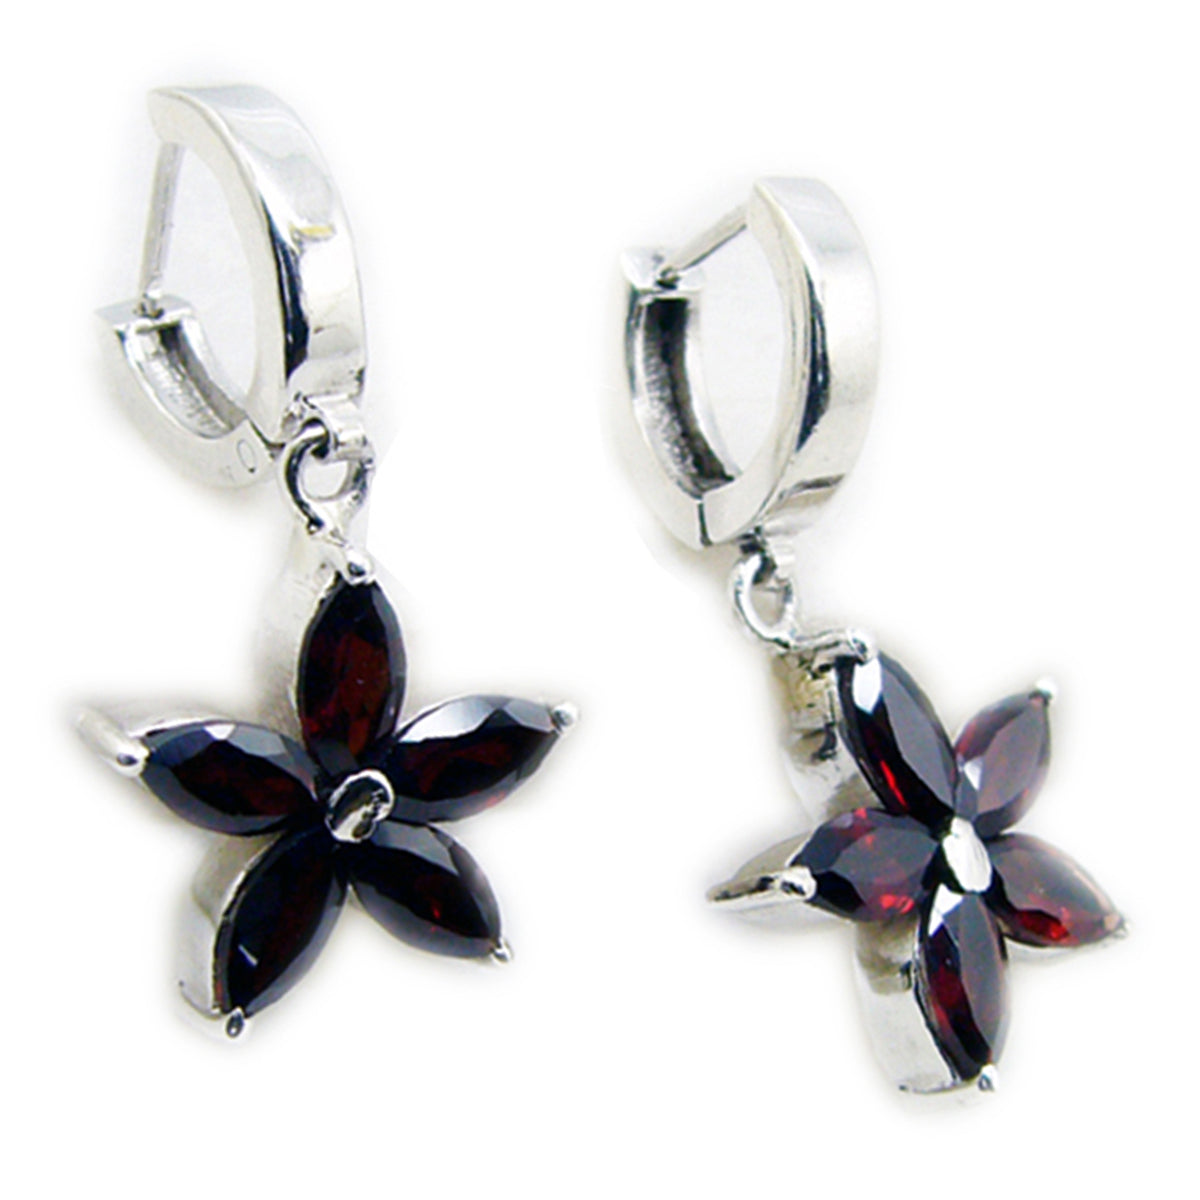 Riyo Nice Gemstone multi shape Faceted Red Garnet Silver Earrings gift for wedding